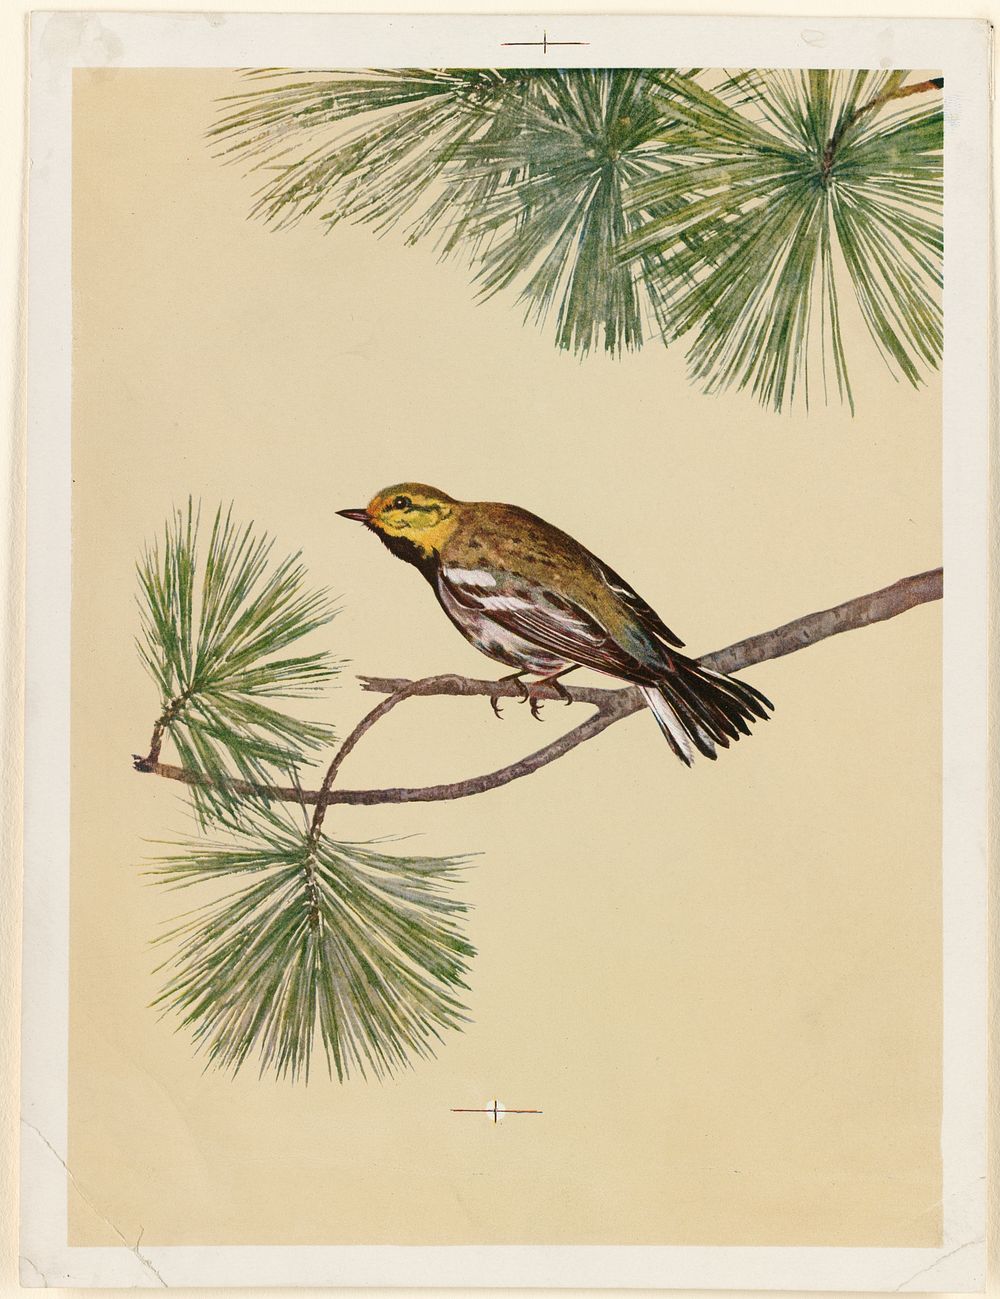             Yellow bird on evergreen branch          